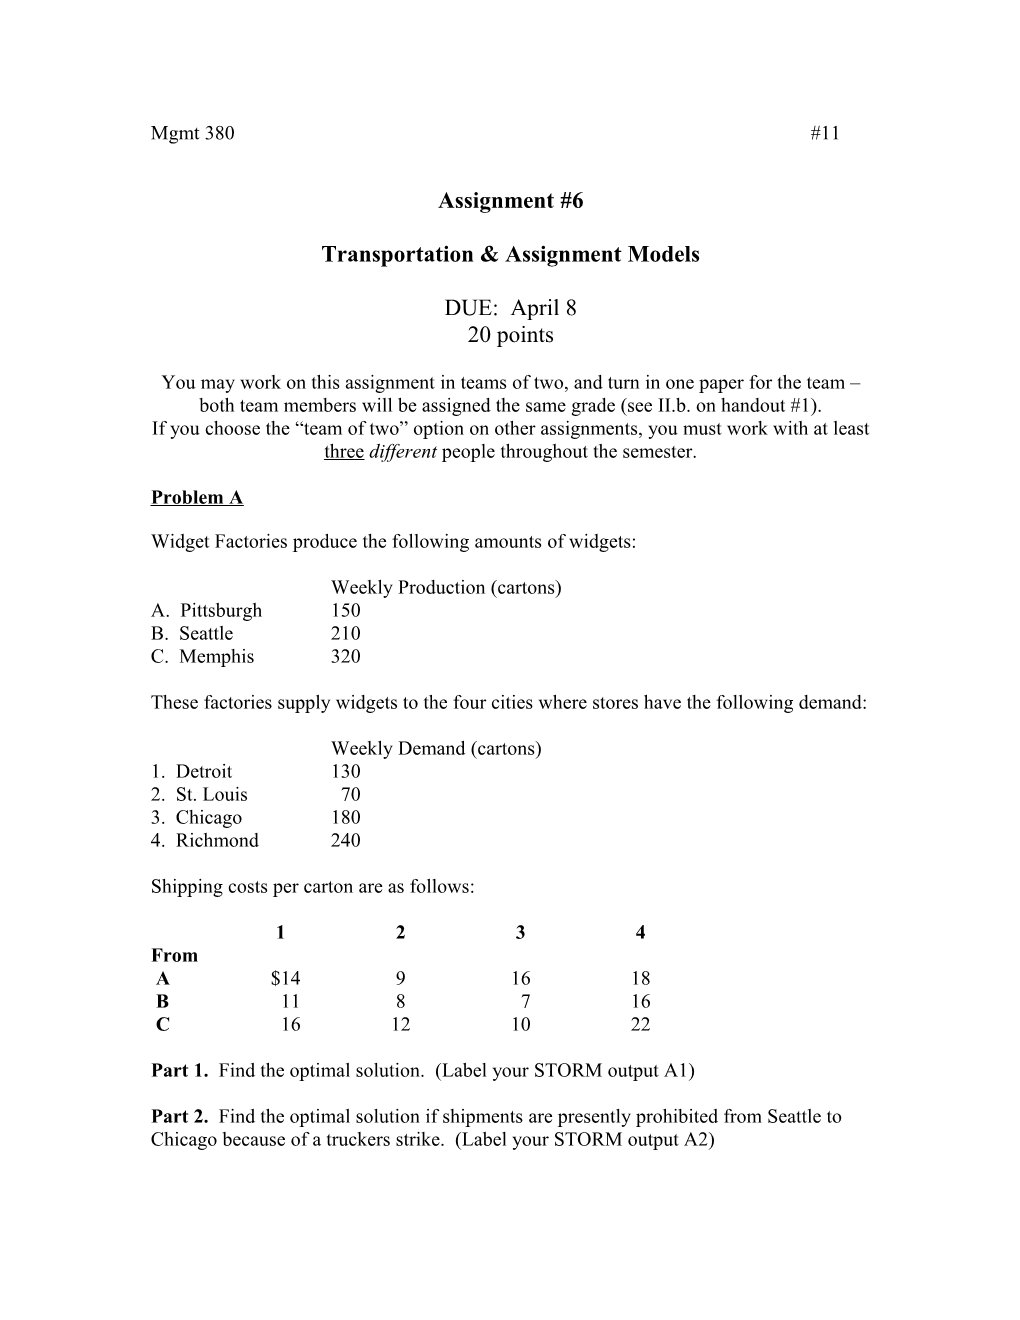 Transportation & Assignment Models